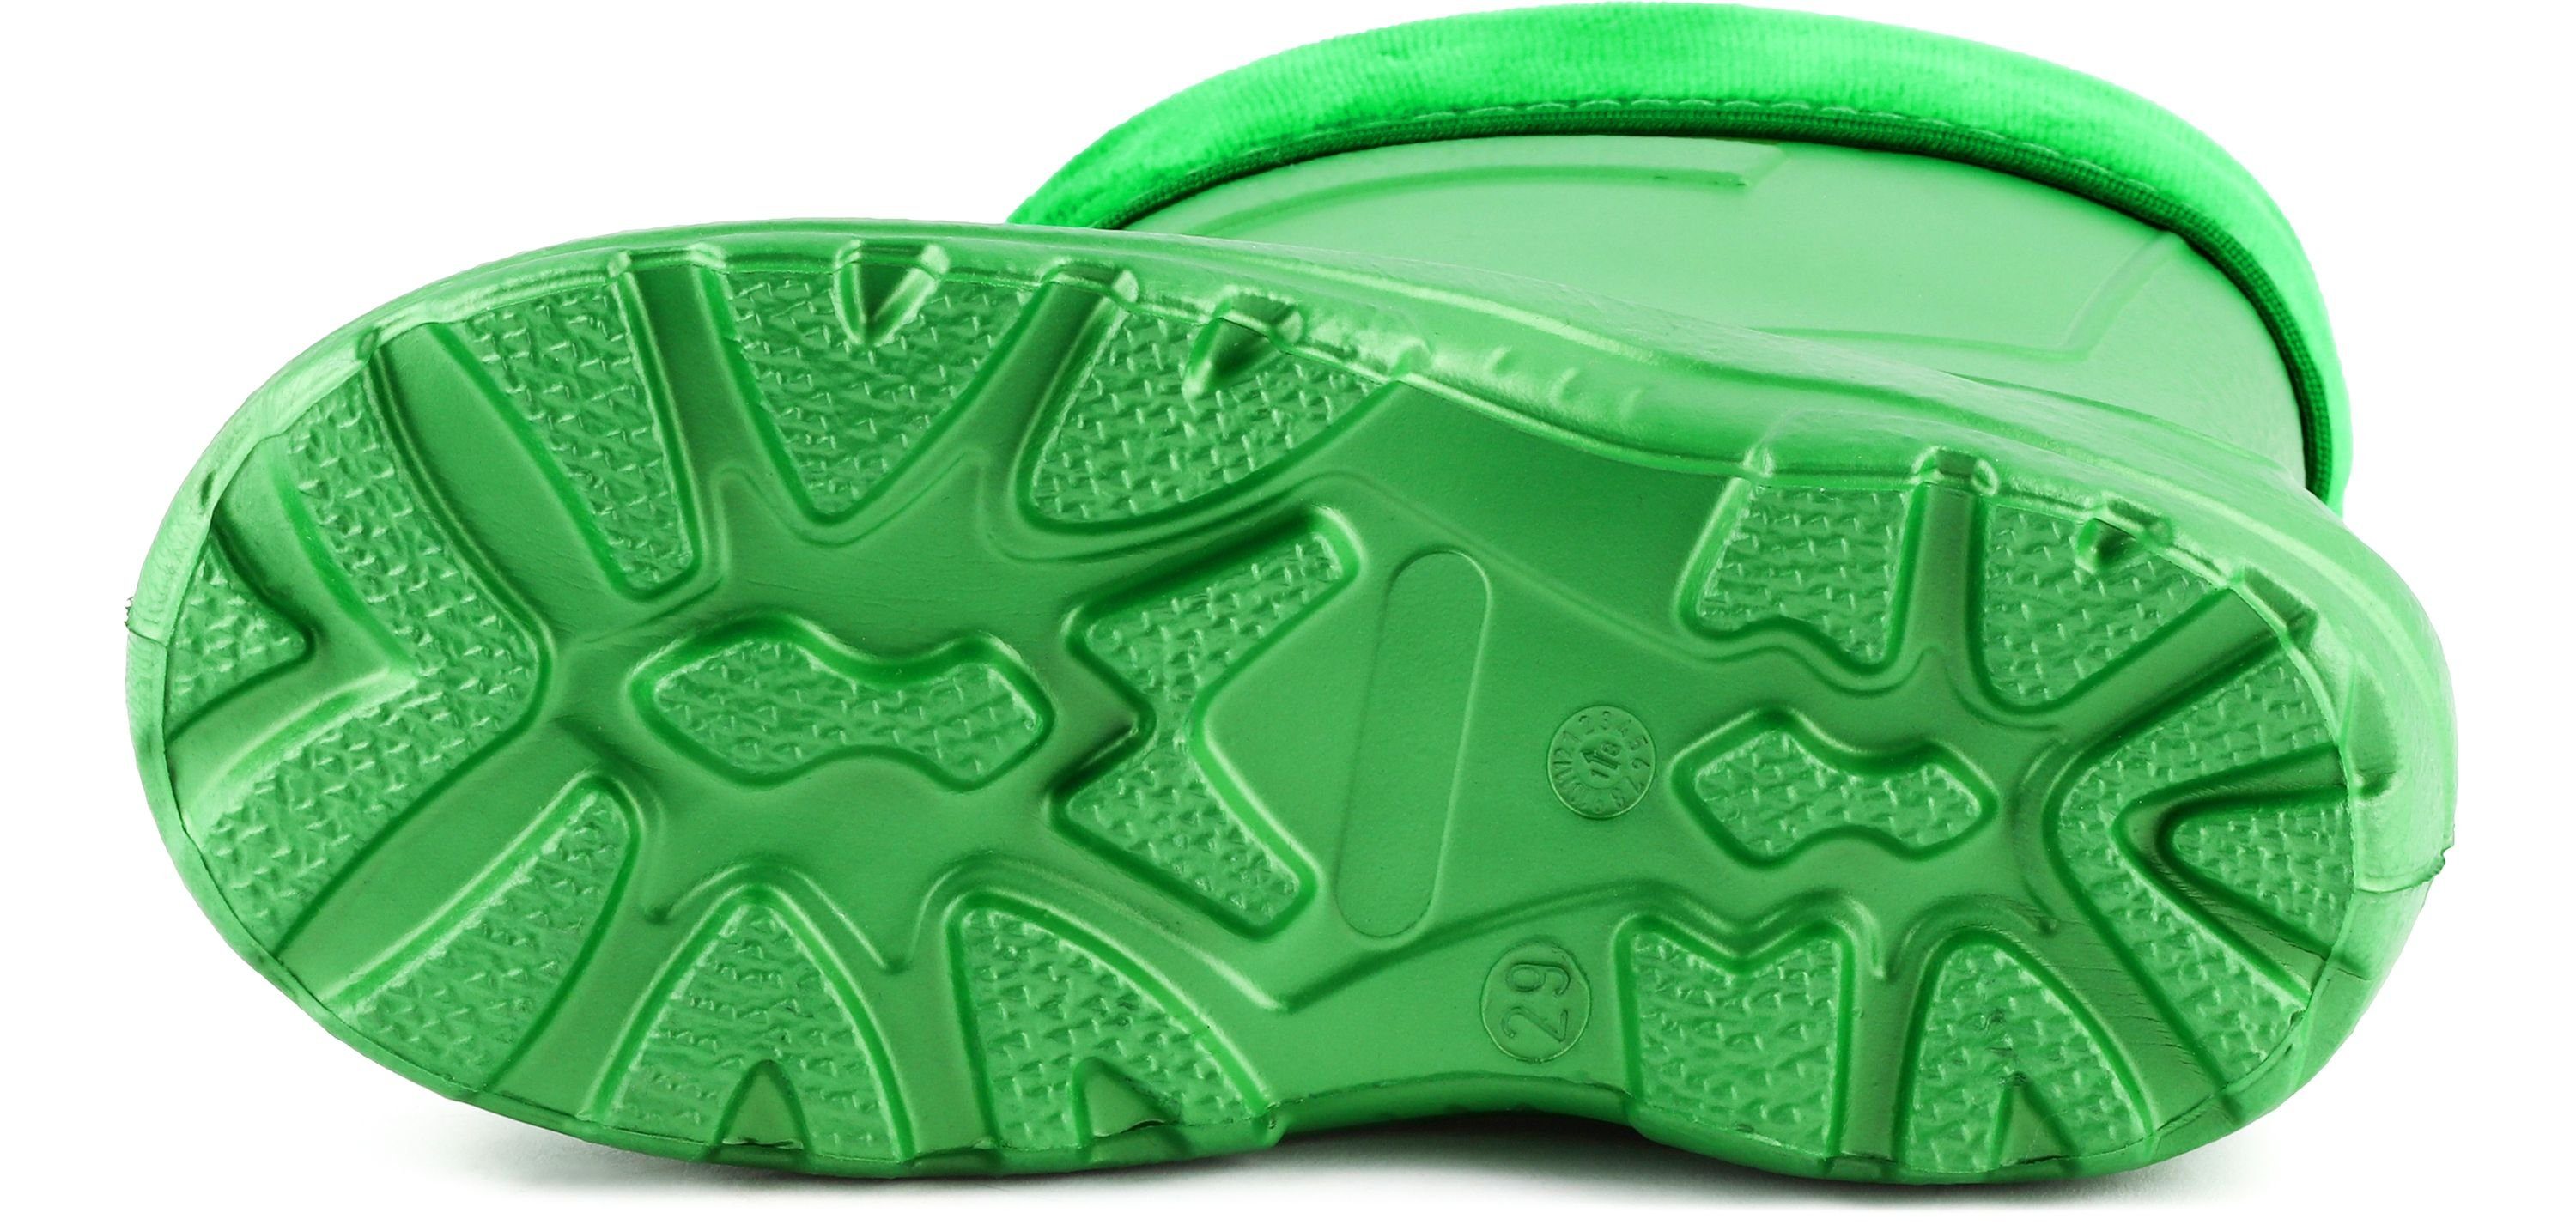 Gummistiefel Ladeheid Thermo gefüttert Smaragdgrün Regenstiefel Kinder EVA KL050 Gummistiefel